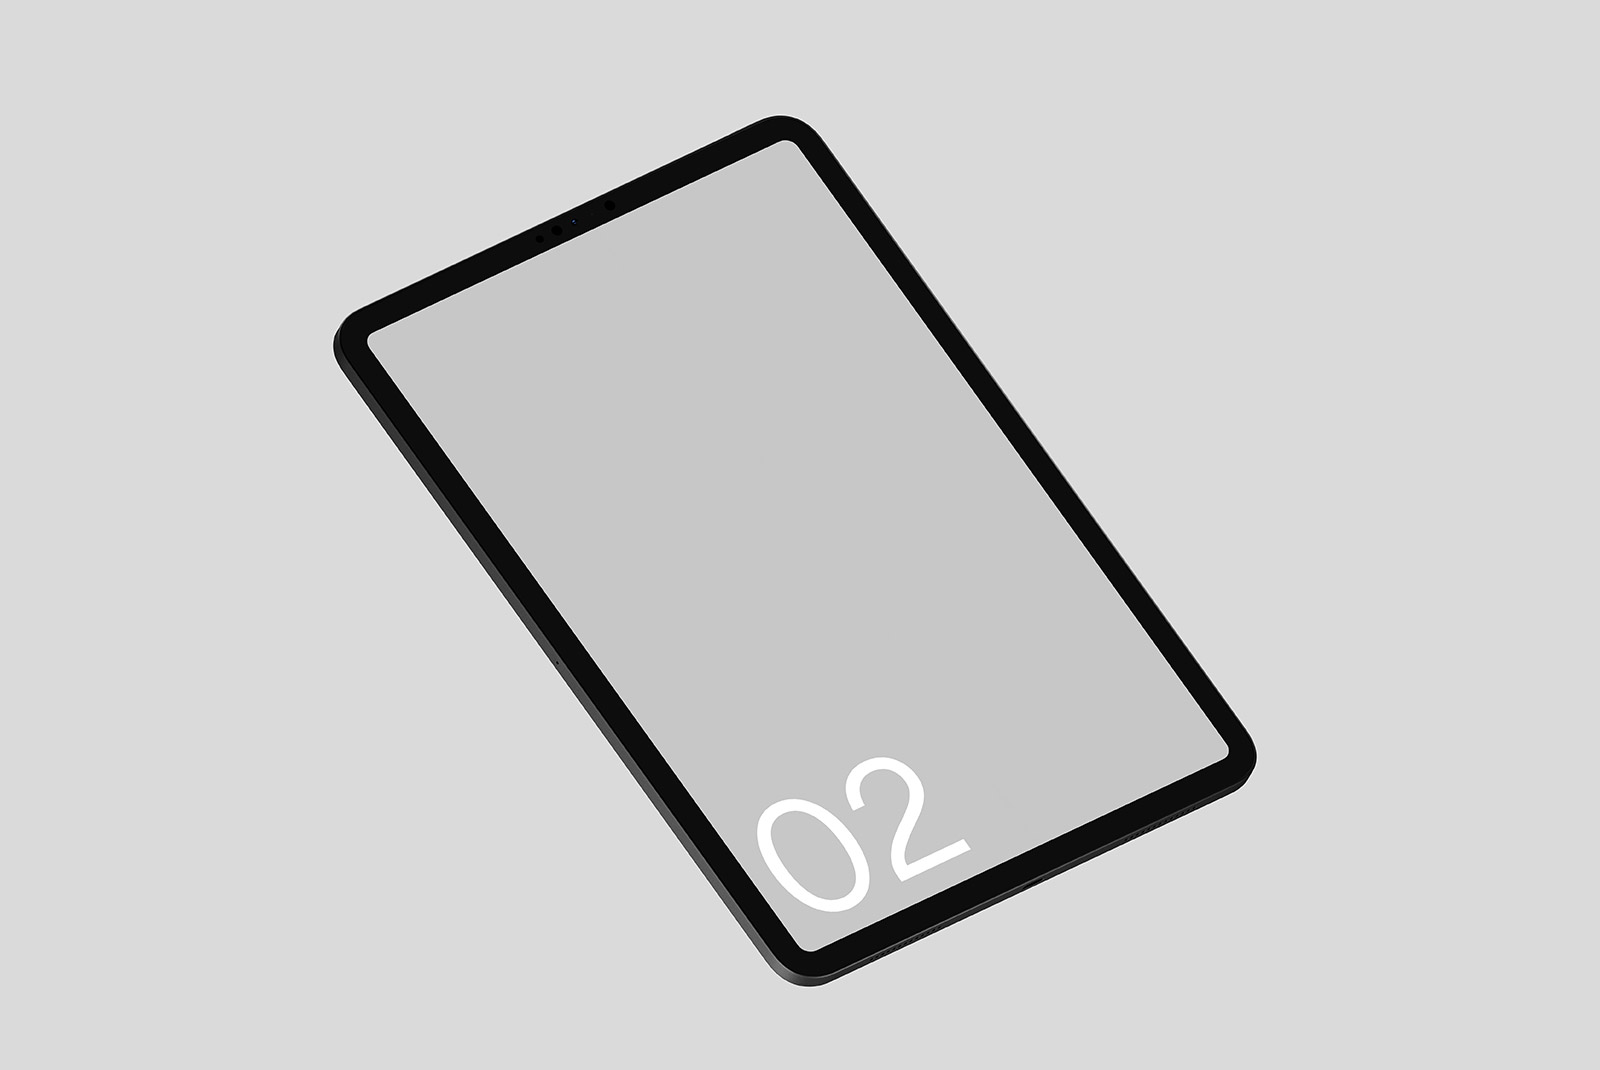 Minimalist tablet mockup with sleek design on a gray background, ideal for presentations, digital mockups, and UX/UI design templates.